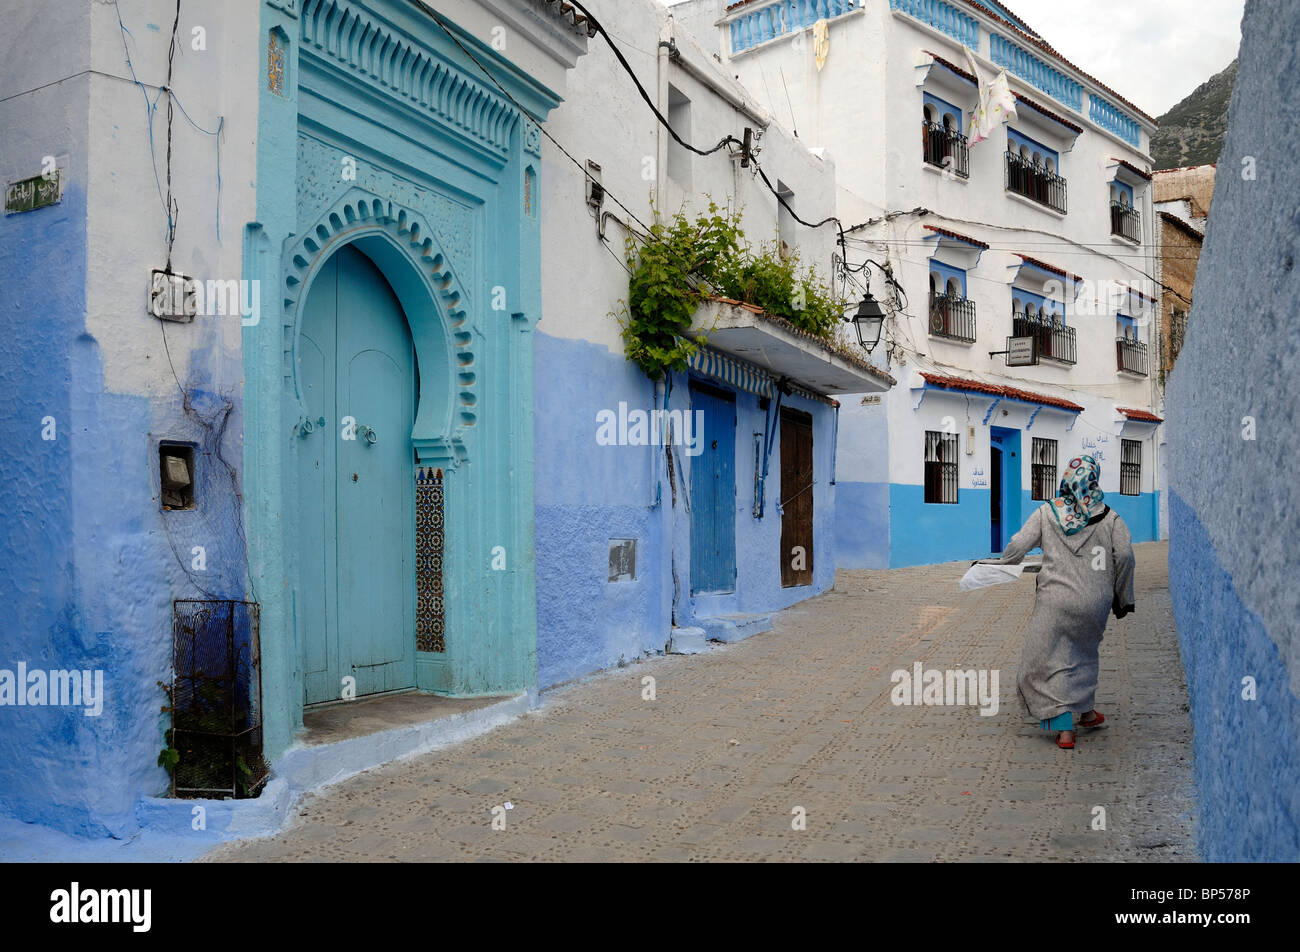 Scena di strada, donna marocchina, Case blu & blu o porta di ingresso, Chefchaouen, Marocco Foto Stock